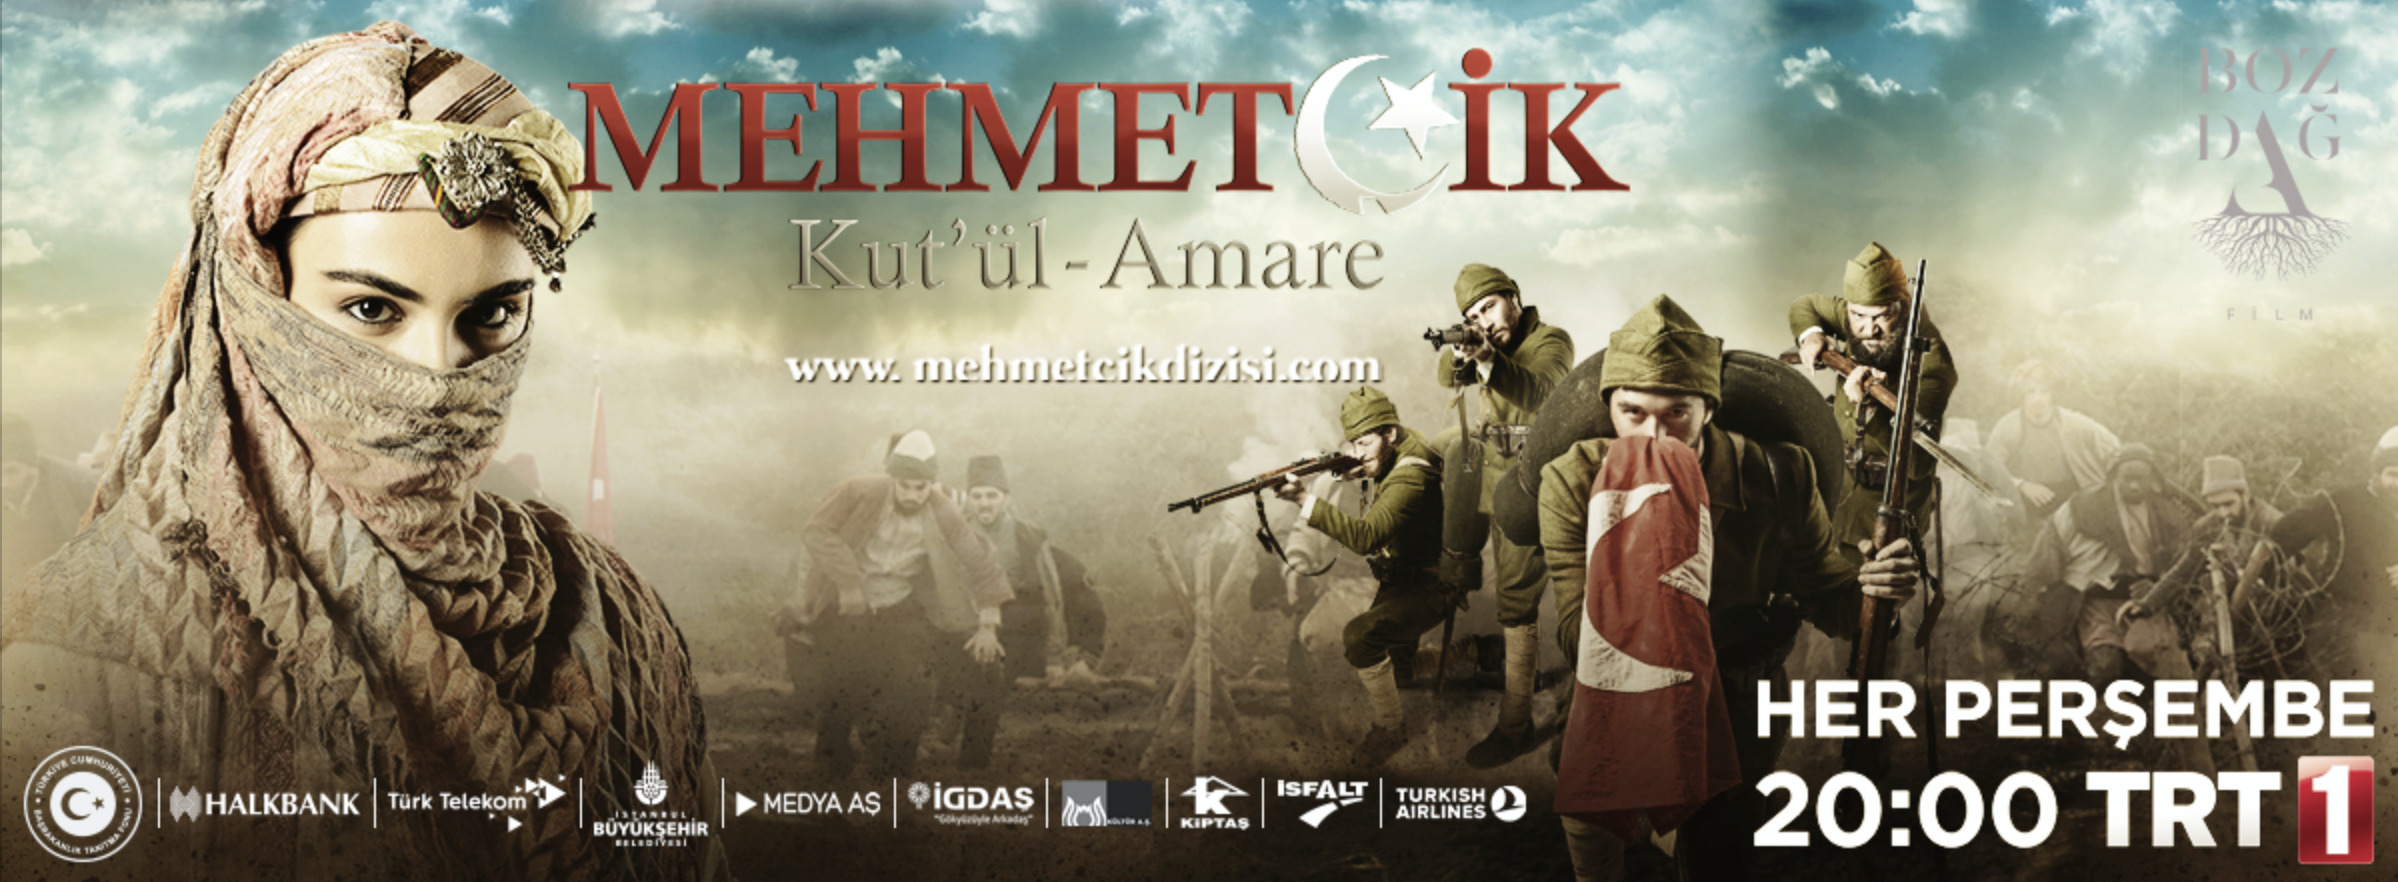 Mega Sized TV Poster Image for Mehmetçik Kut'ül Amare (#32 of 41)